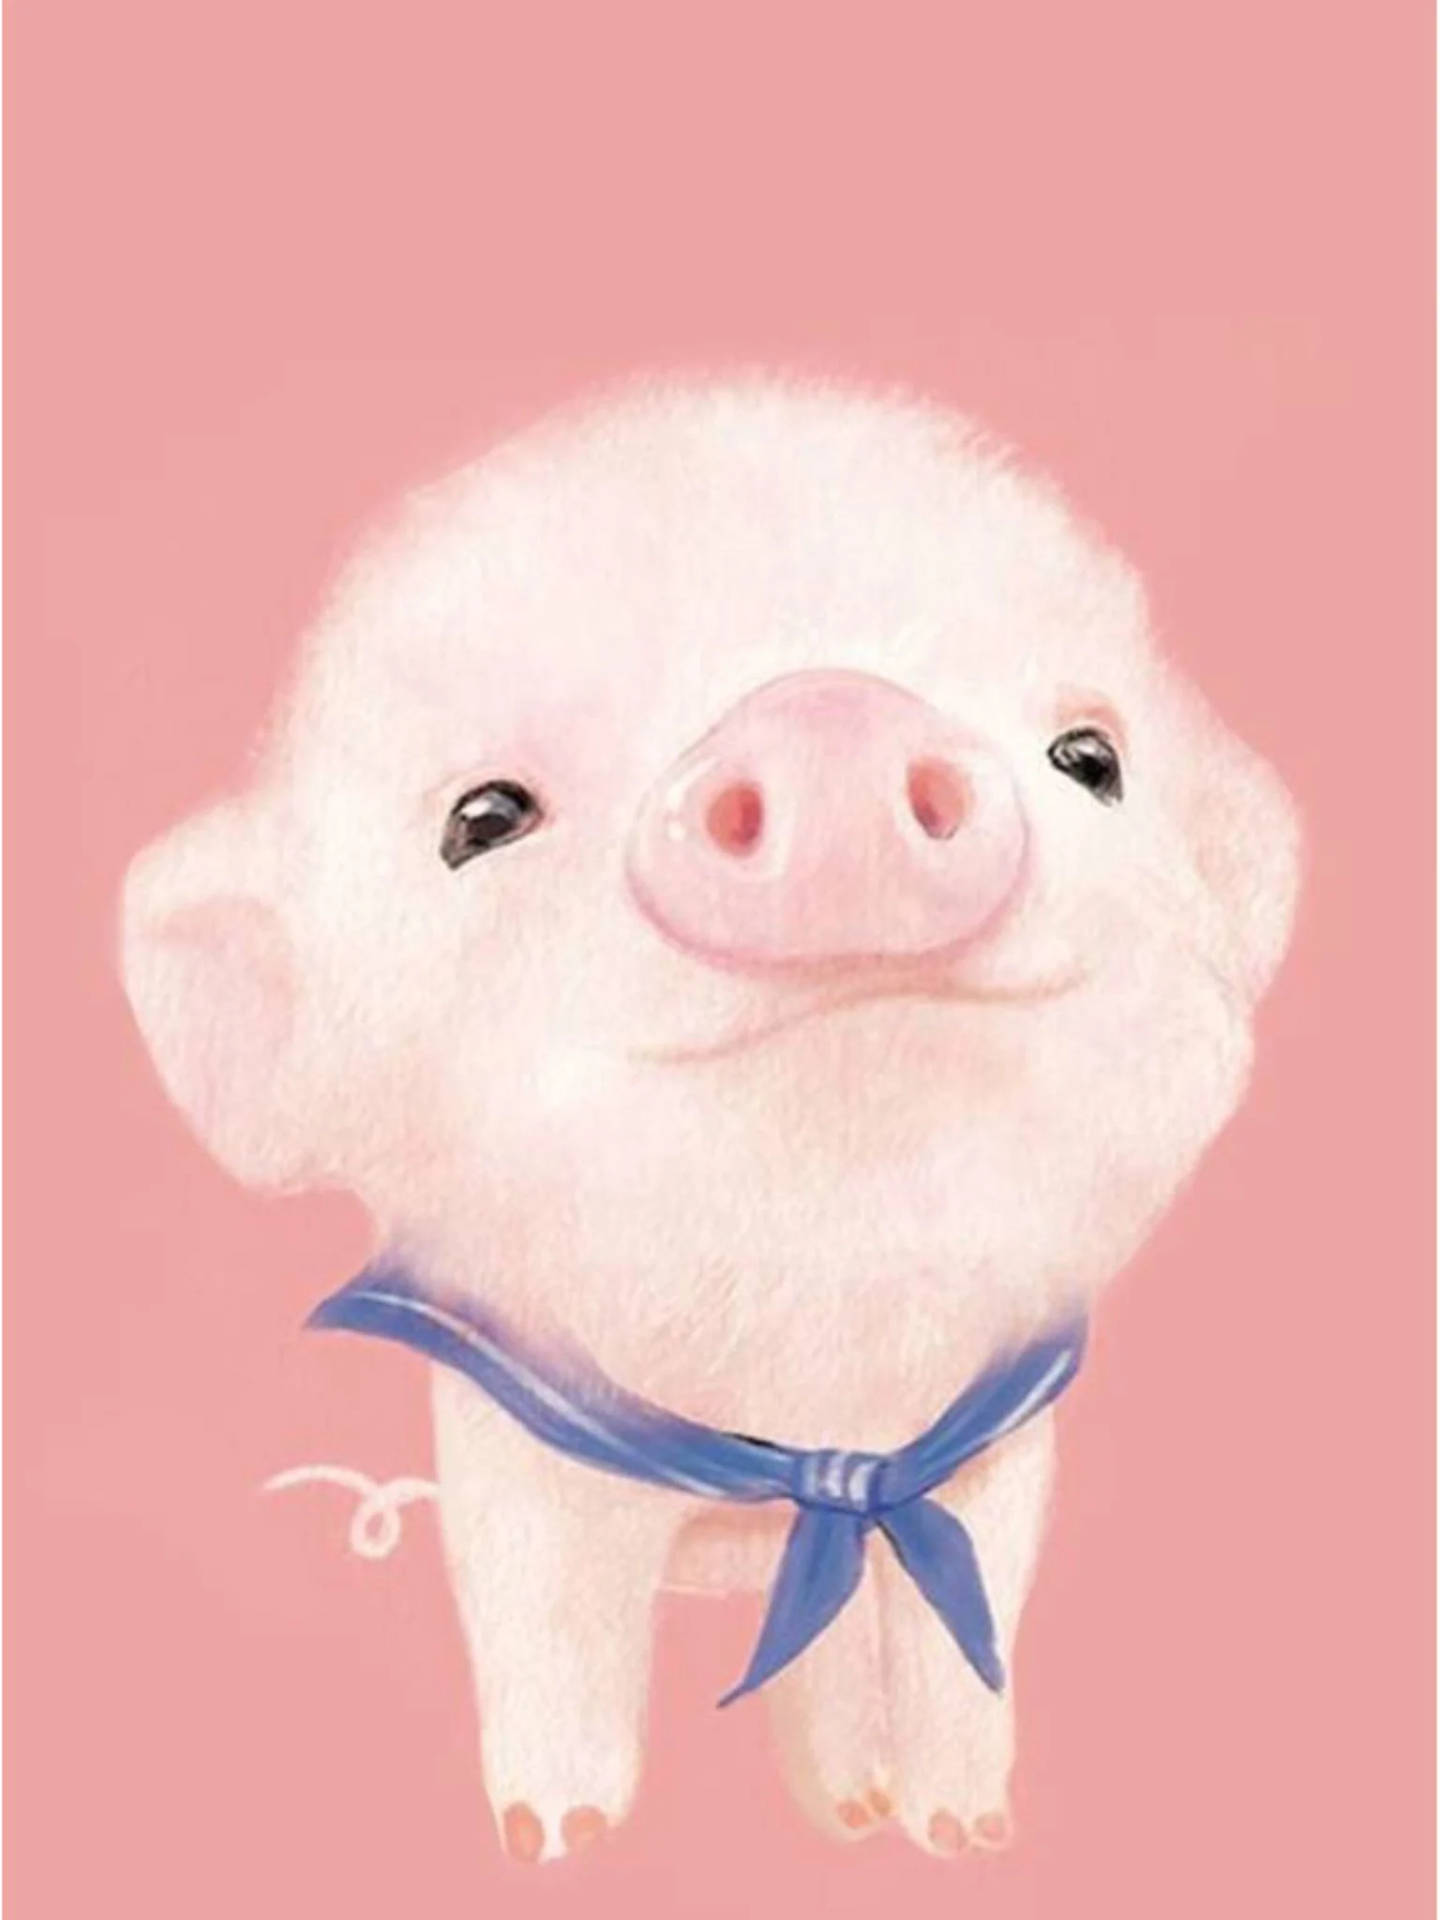 Cute pig digital painting wallpaper